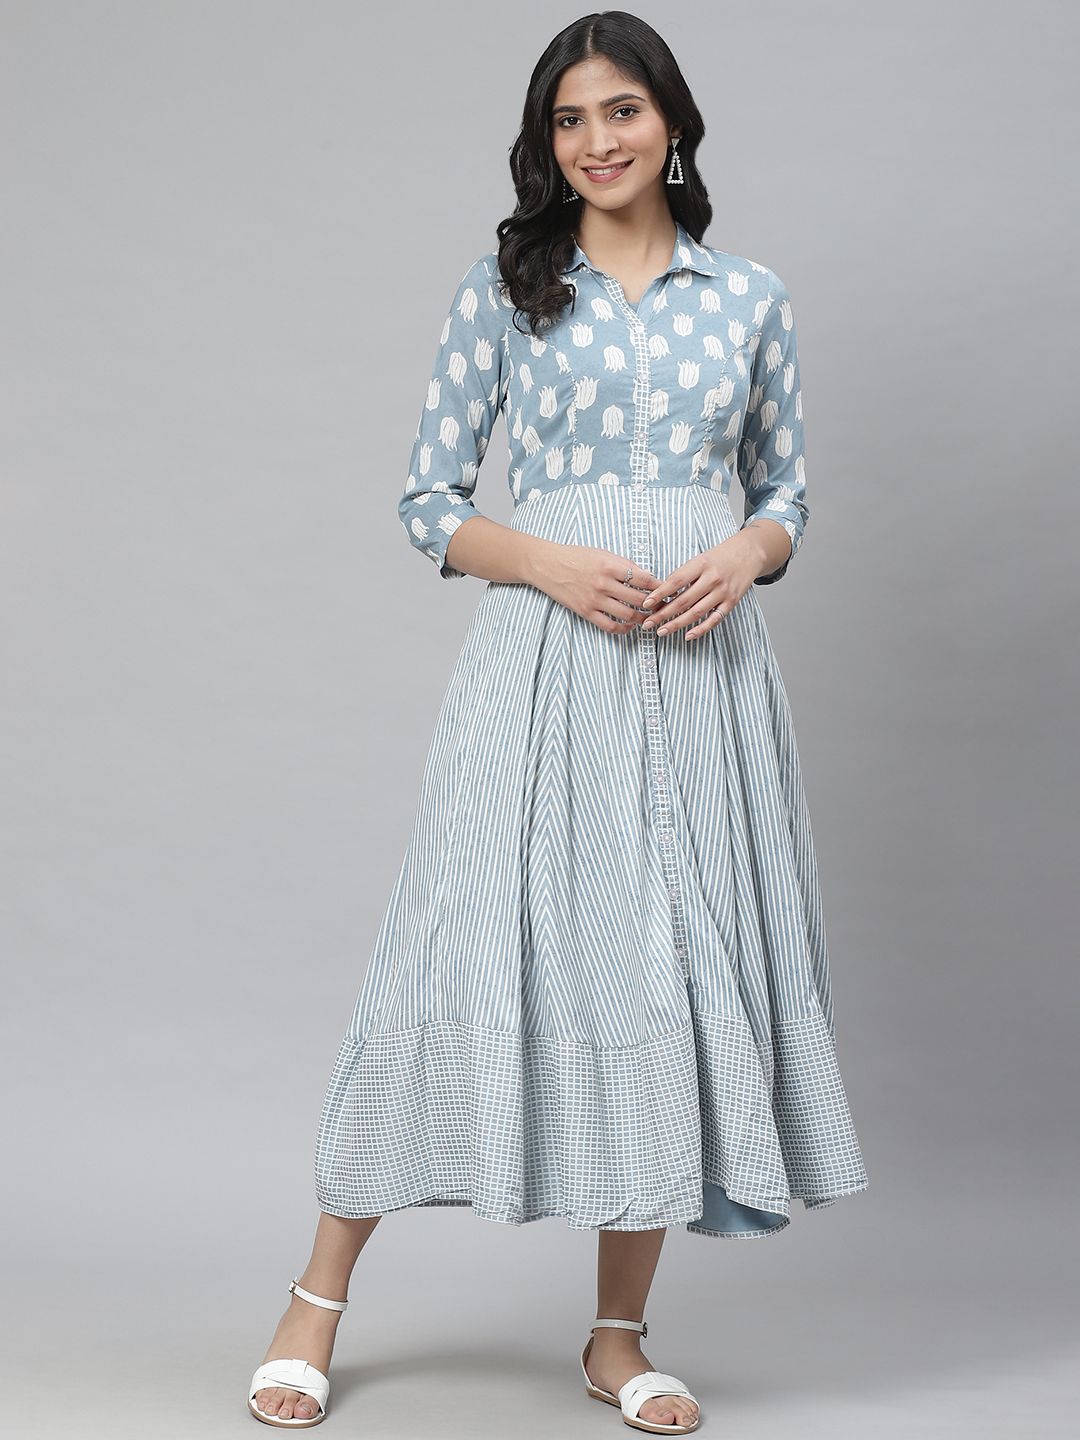 Rangriti Women Blue & White Striped Shirt Dress Price in India